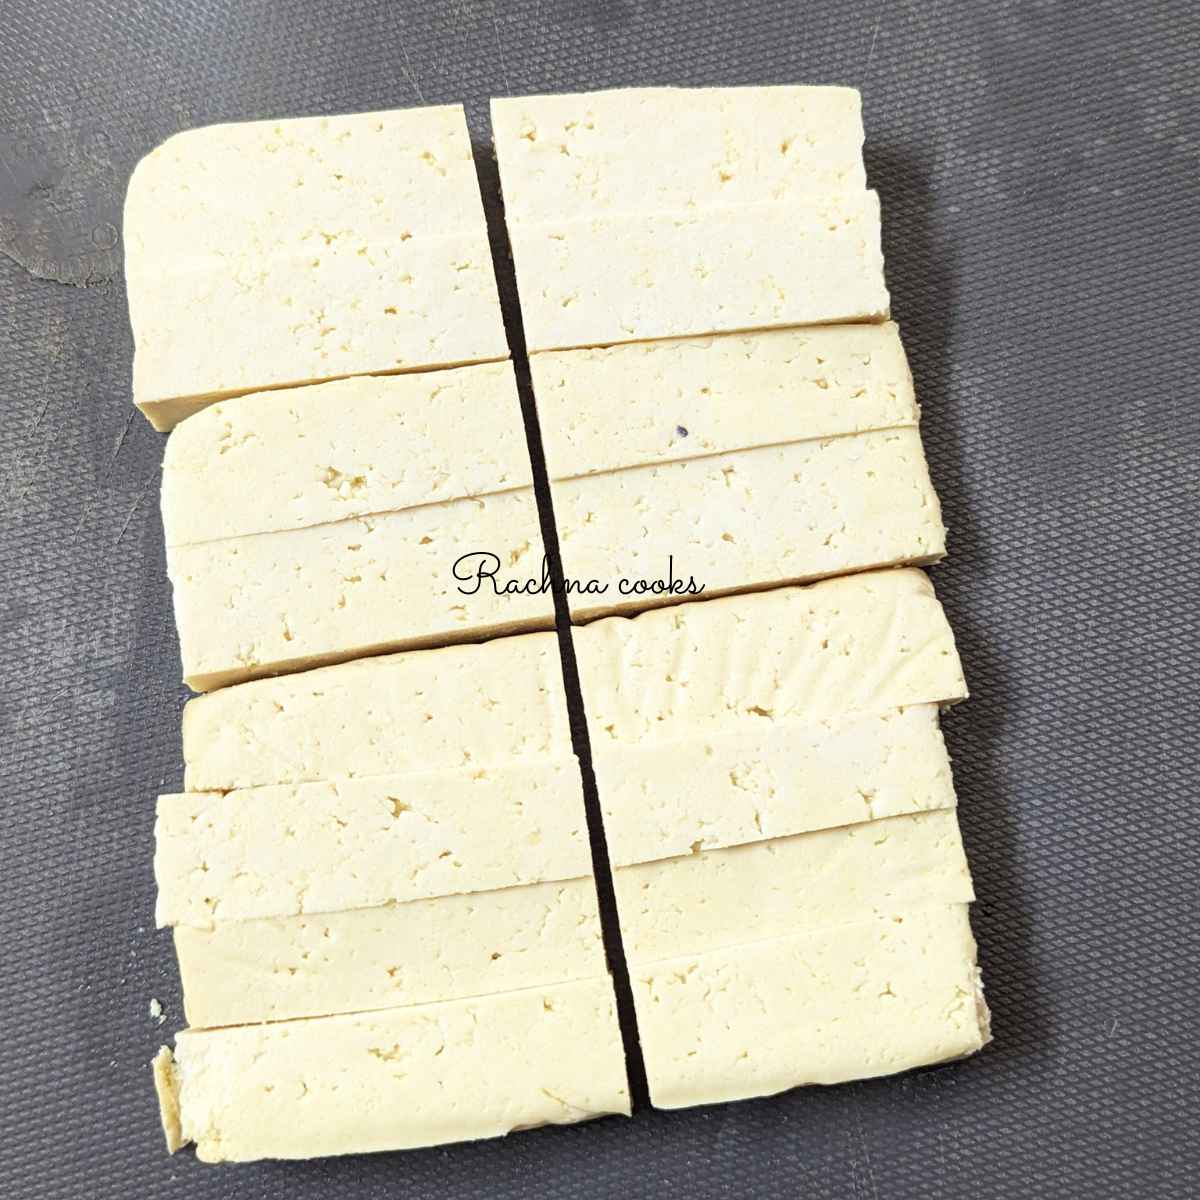 Tofu block cut into fries